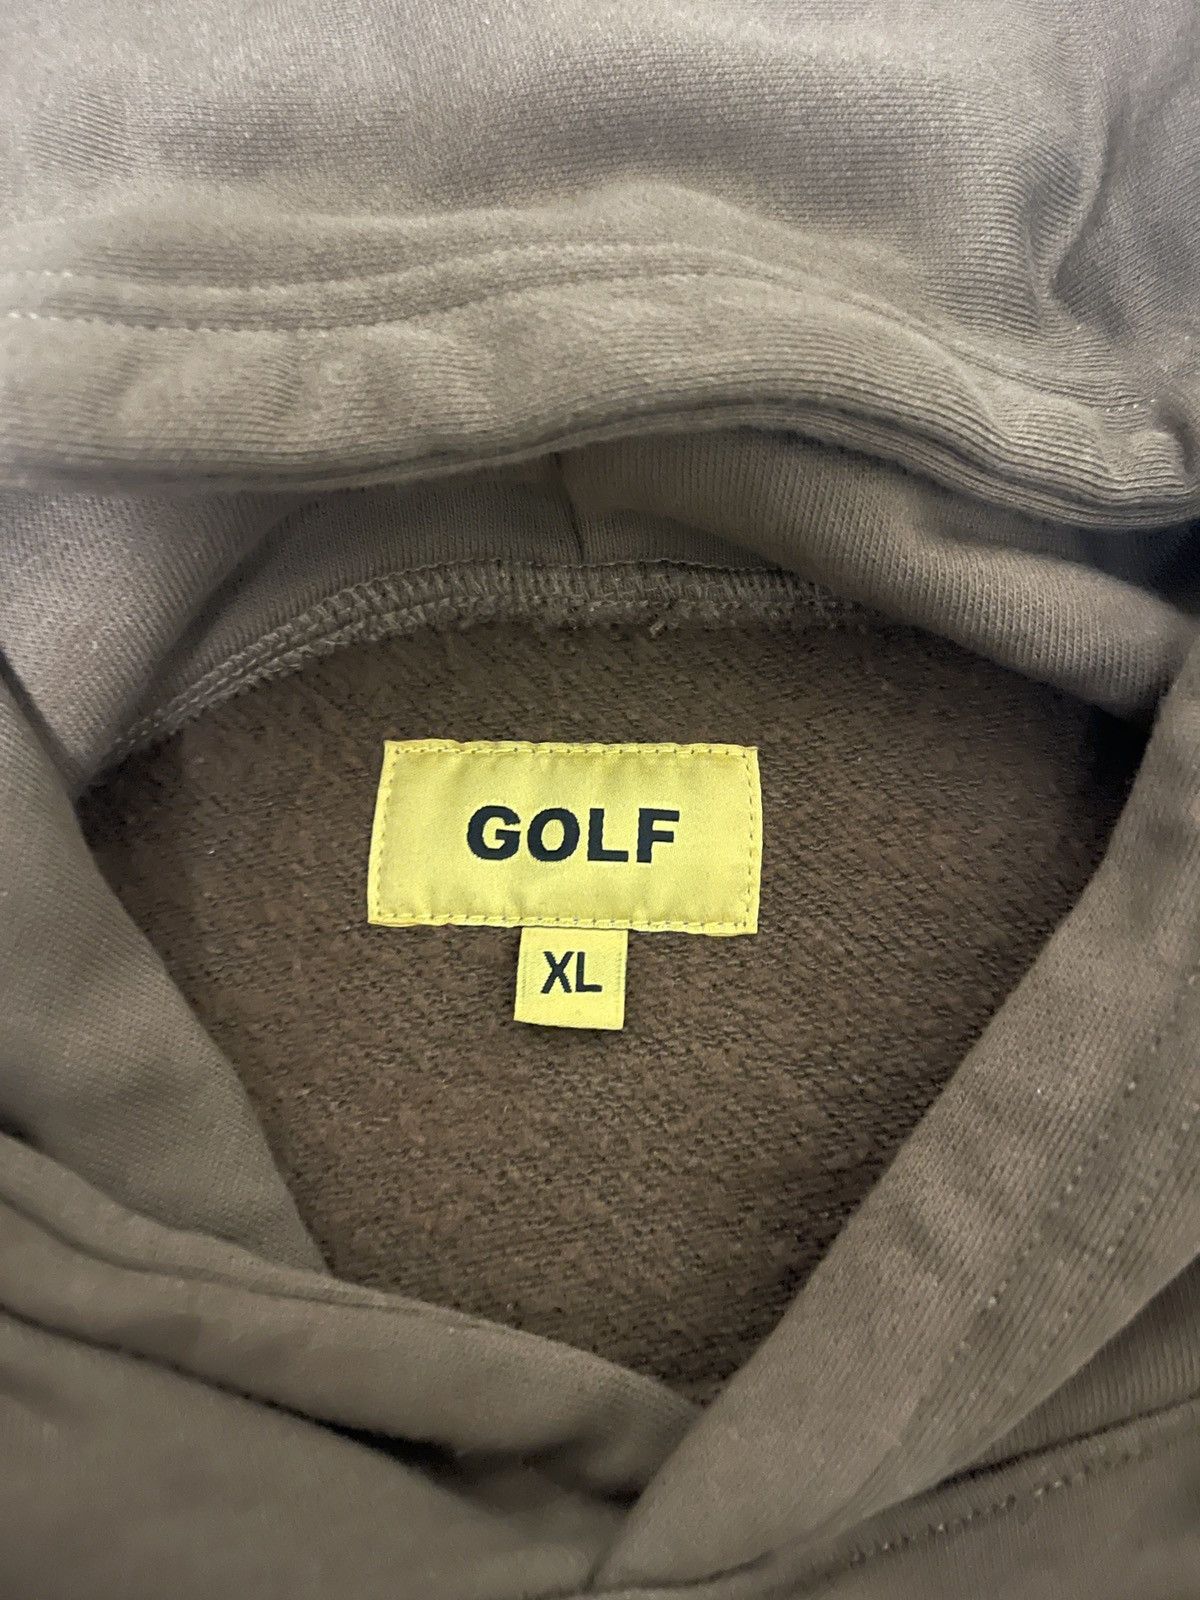 Golf Wang Tyler The Creator Brown CMIYGL Tour Star Stamp Hoodie XL Size US XL / EU 56 / 4 - 7 Thumbnail